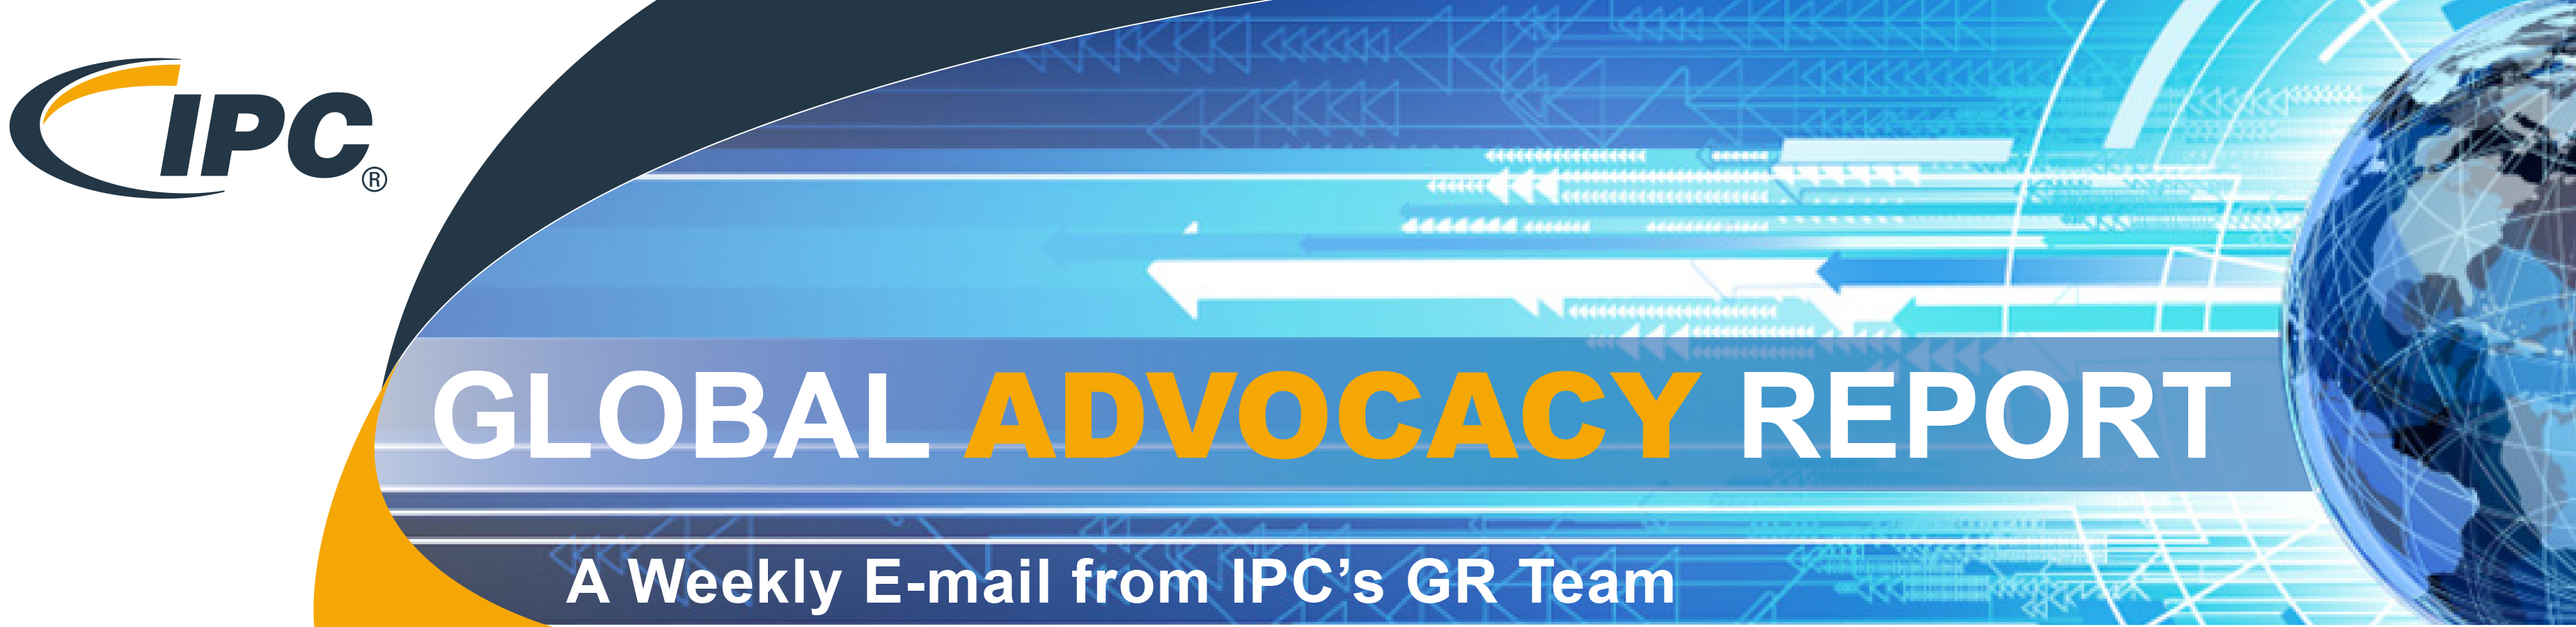 Global Advocacy Report newsletter header